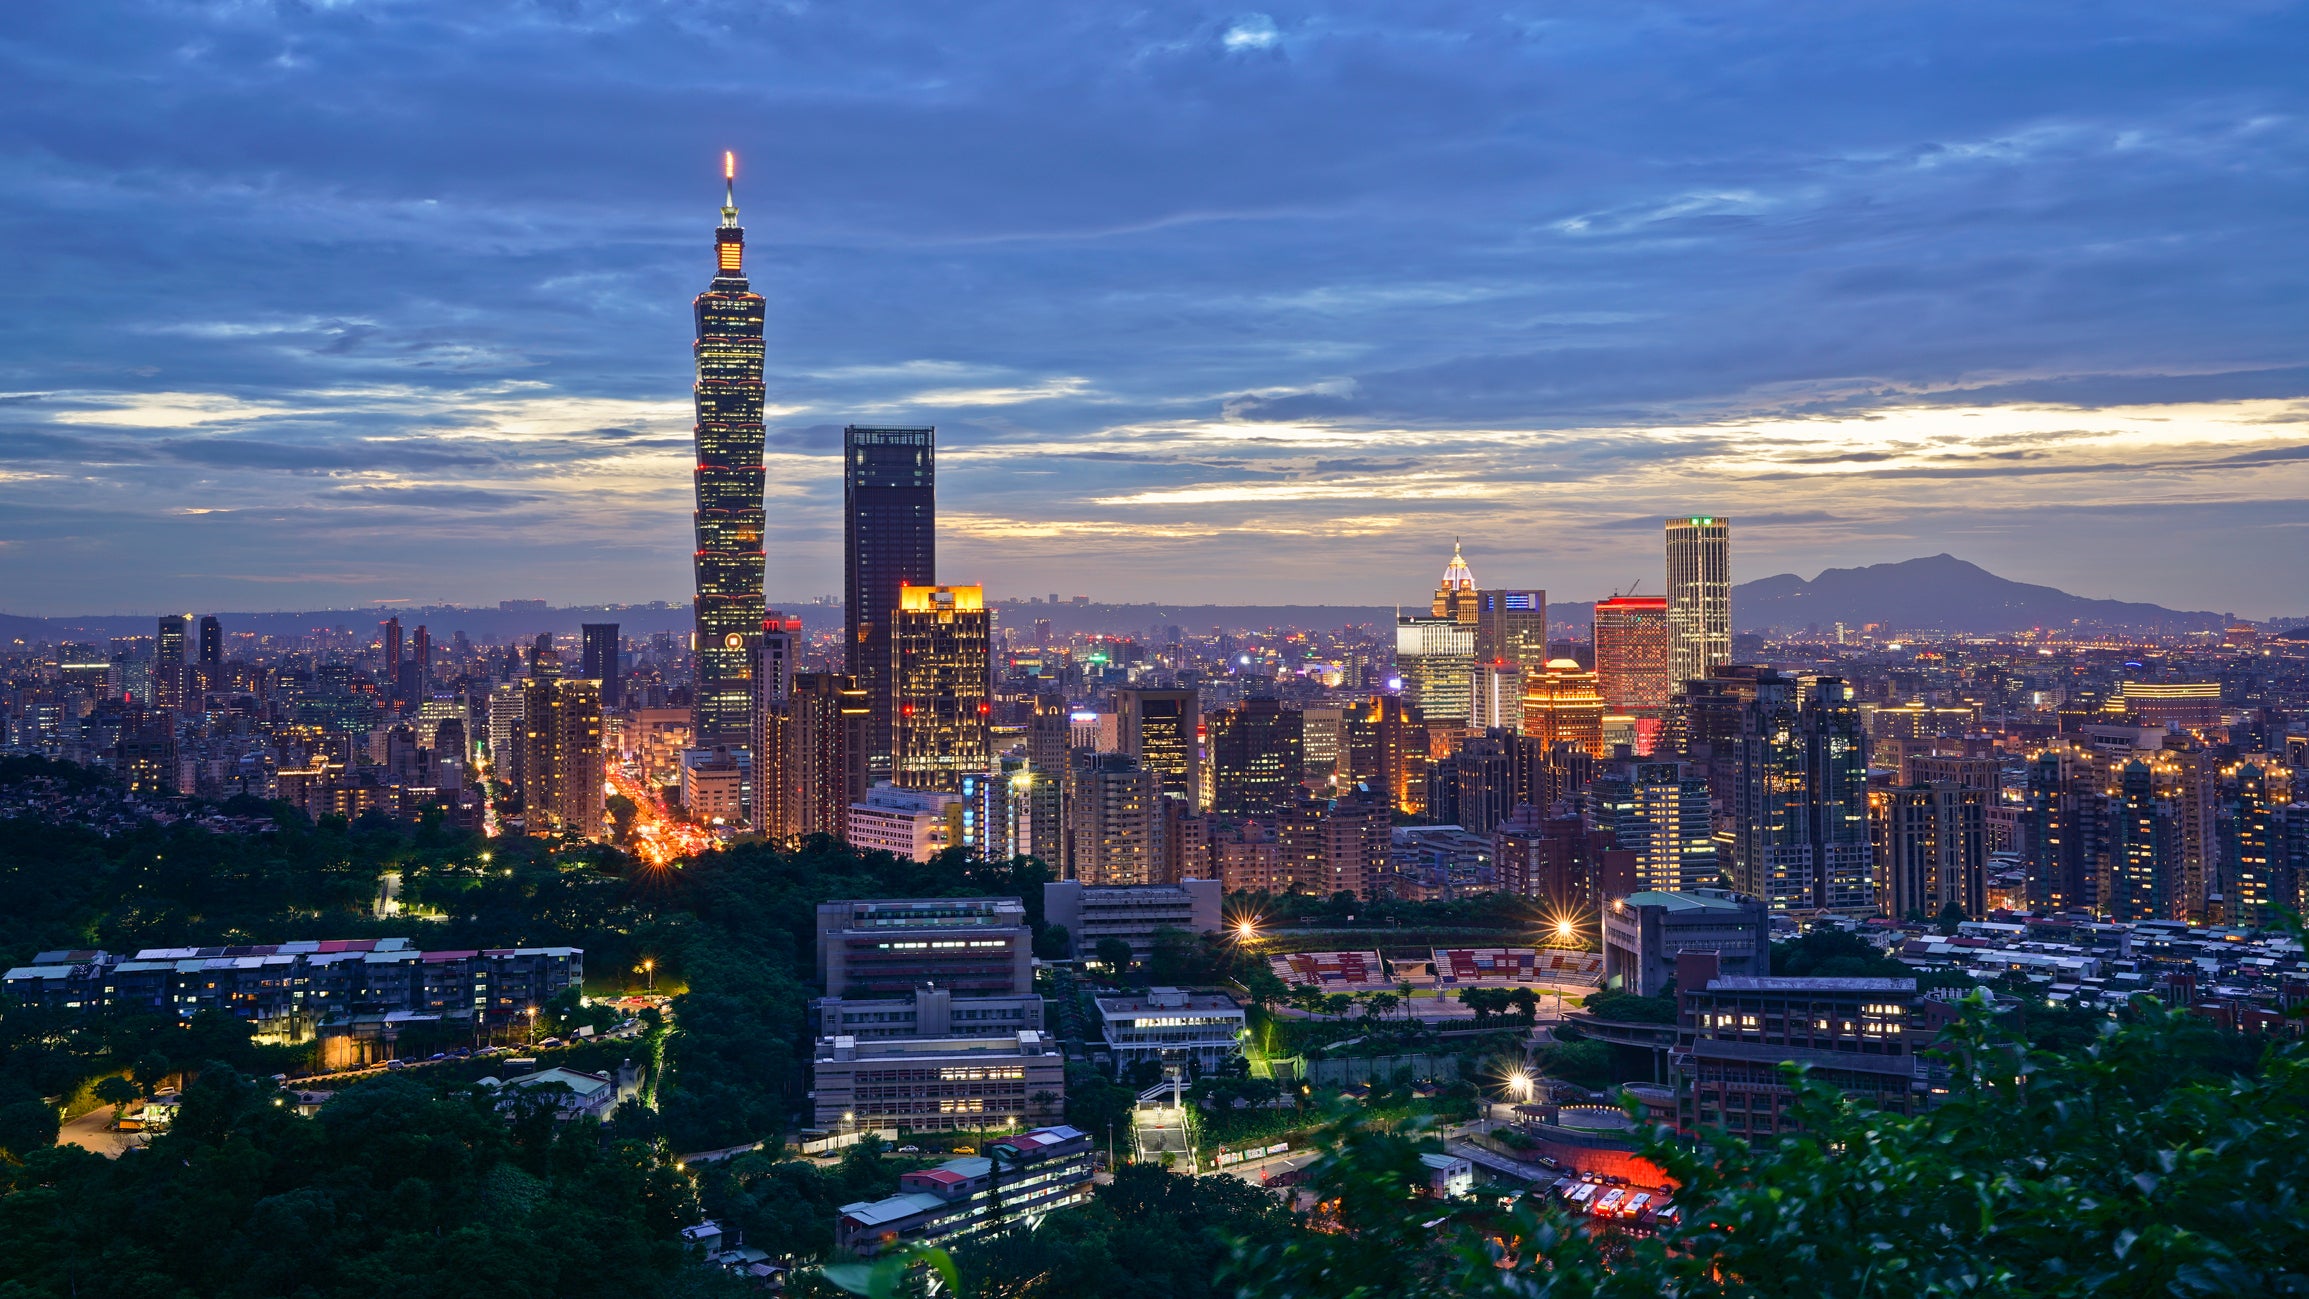 the sunset view of Taipei city